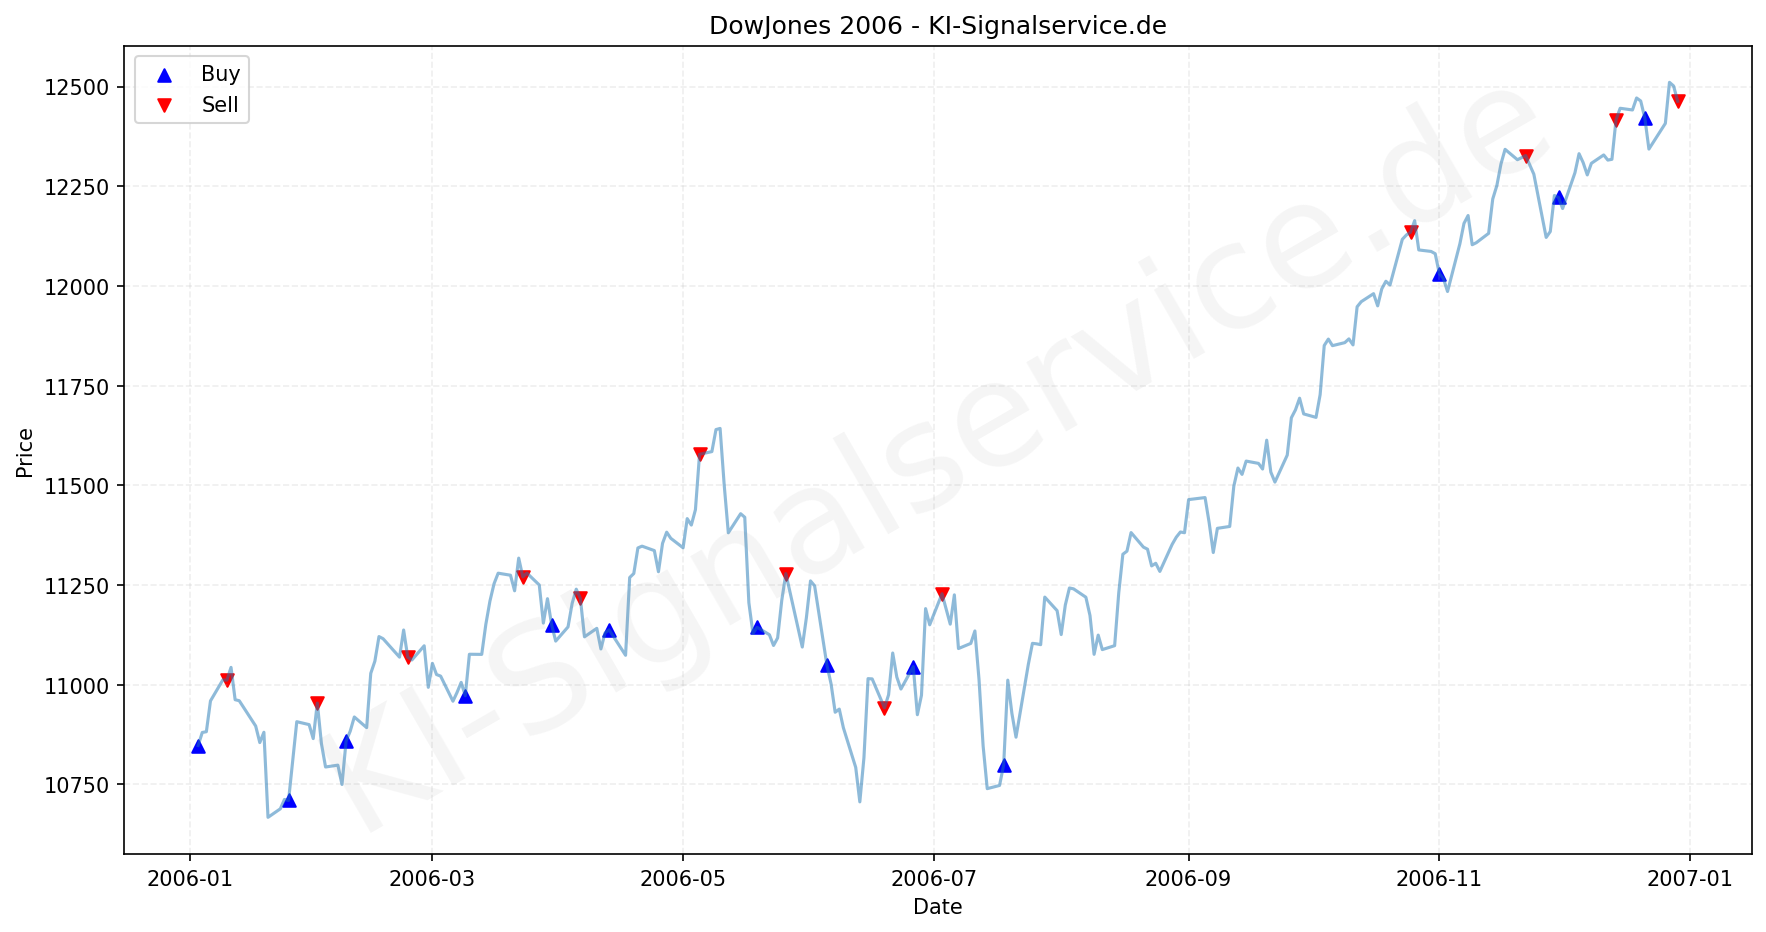 DOWJONES Index Performance Chart - KI Tradingsignale 2006